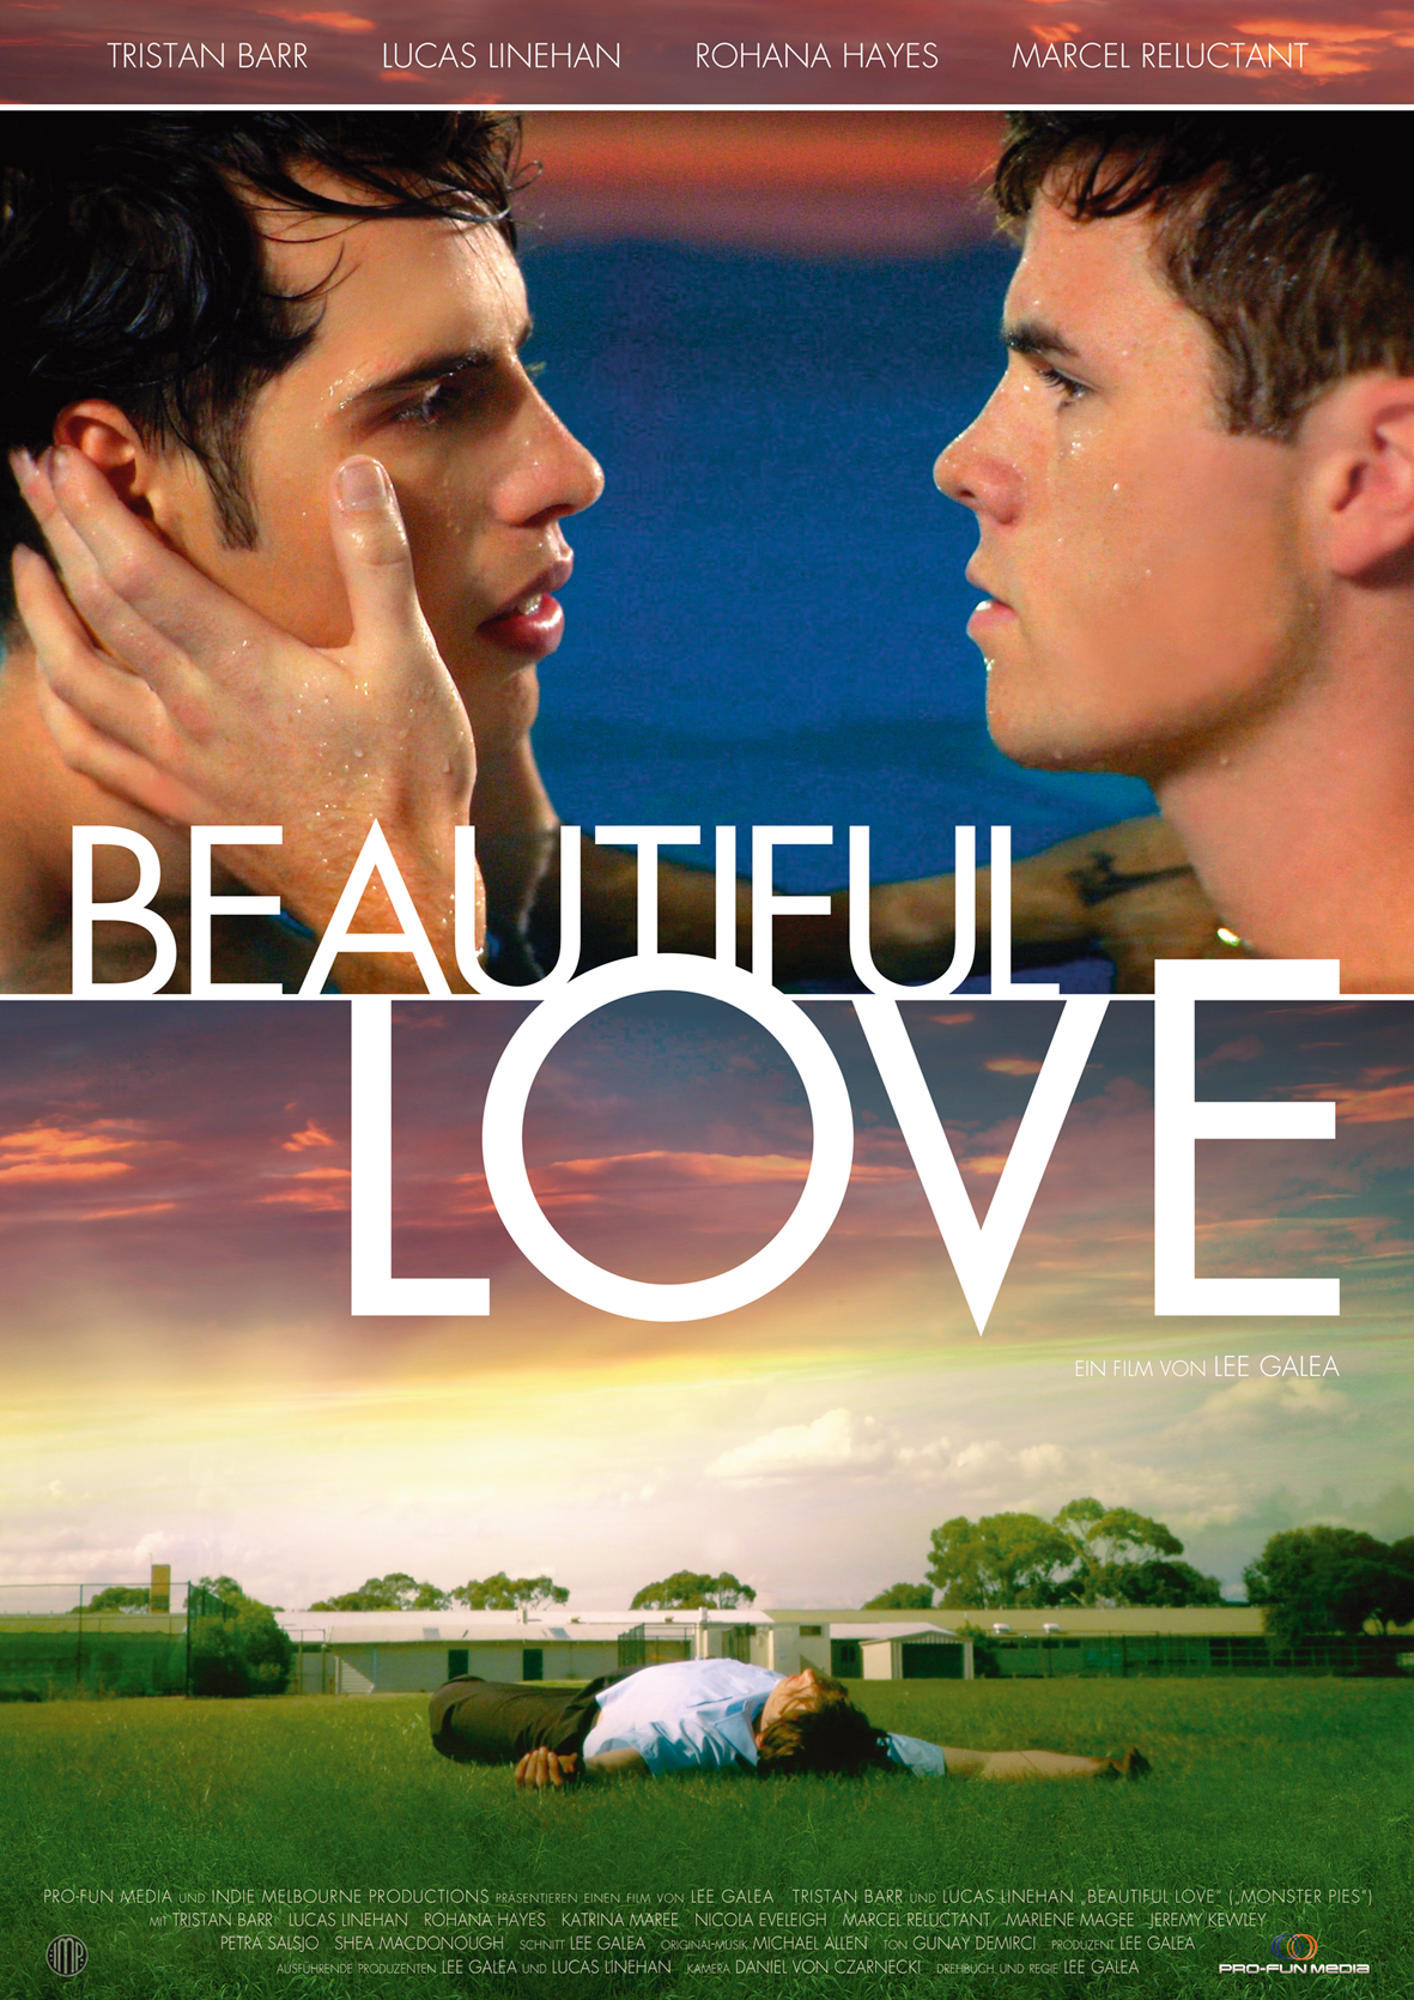 DVD Beautiful Love